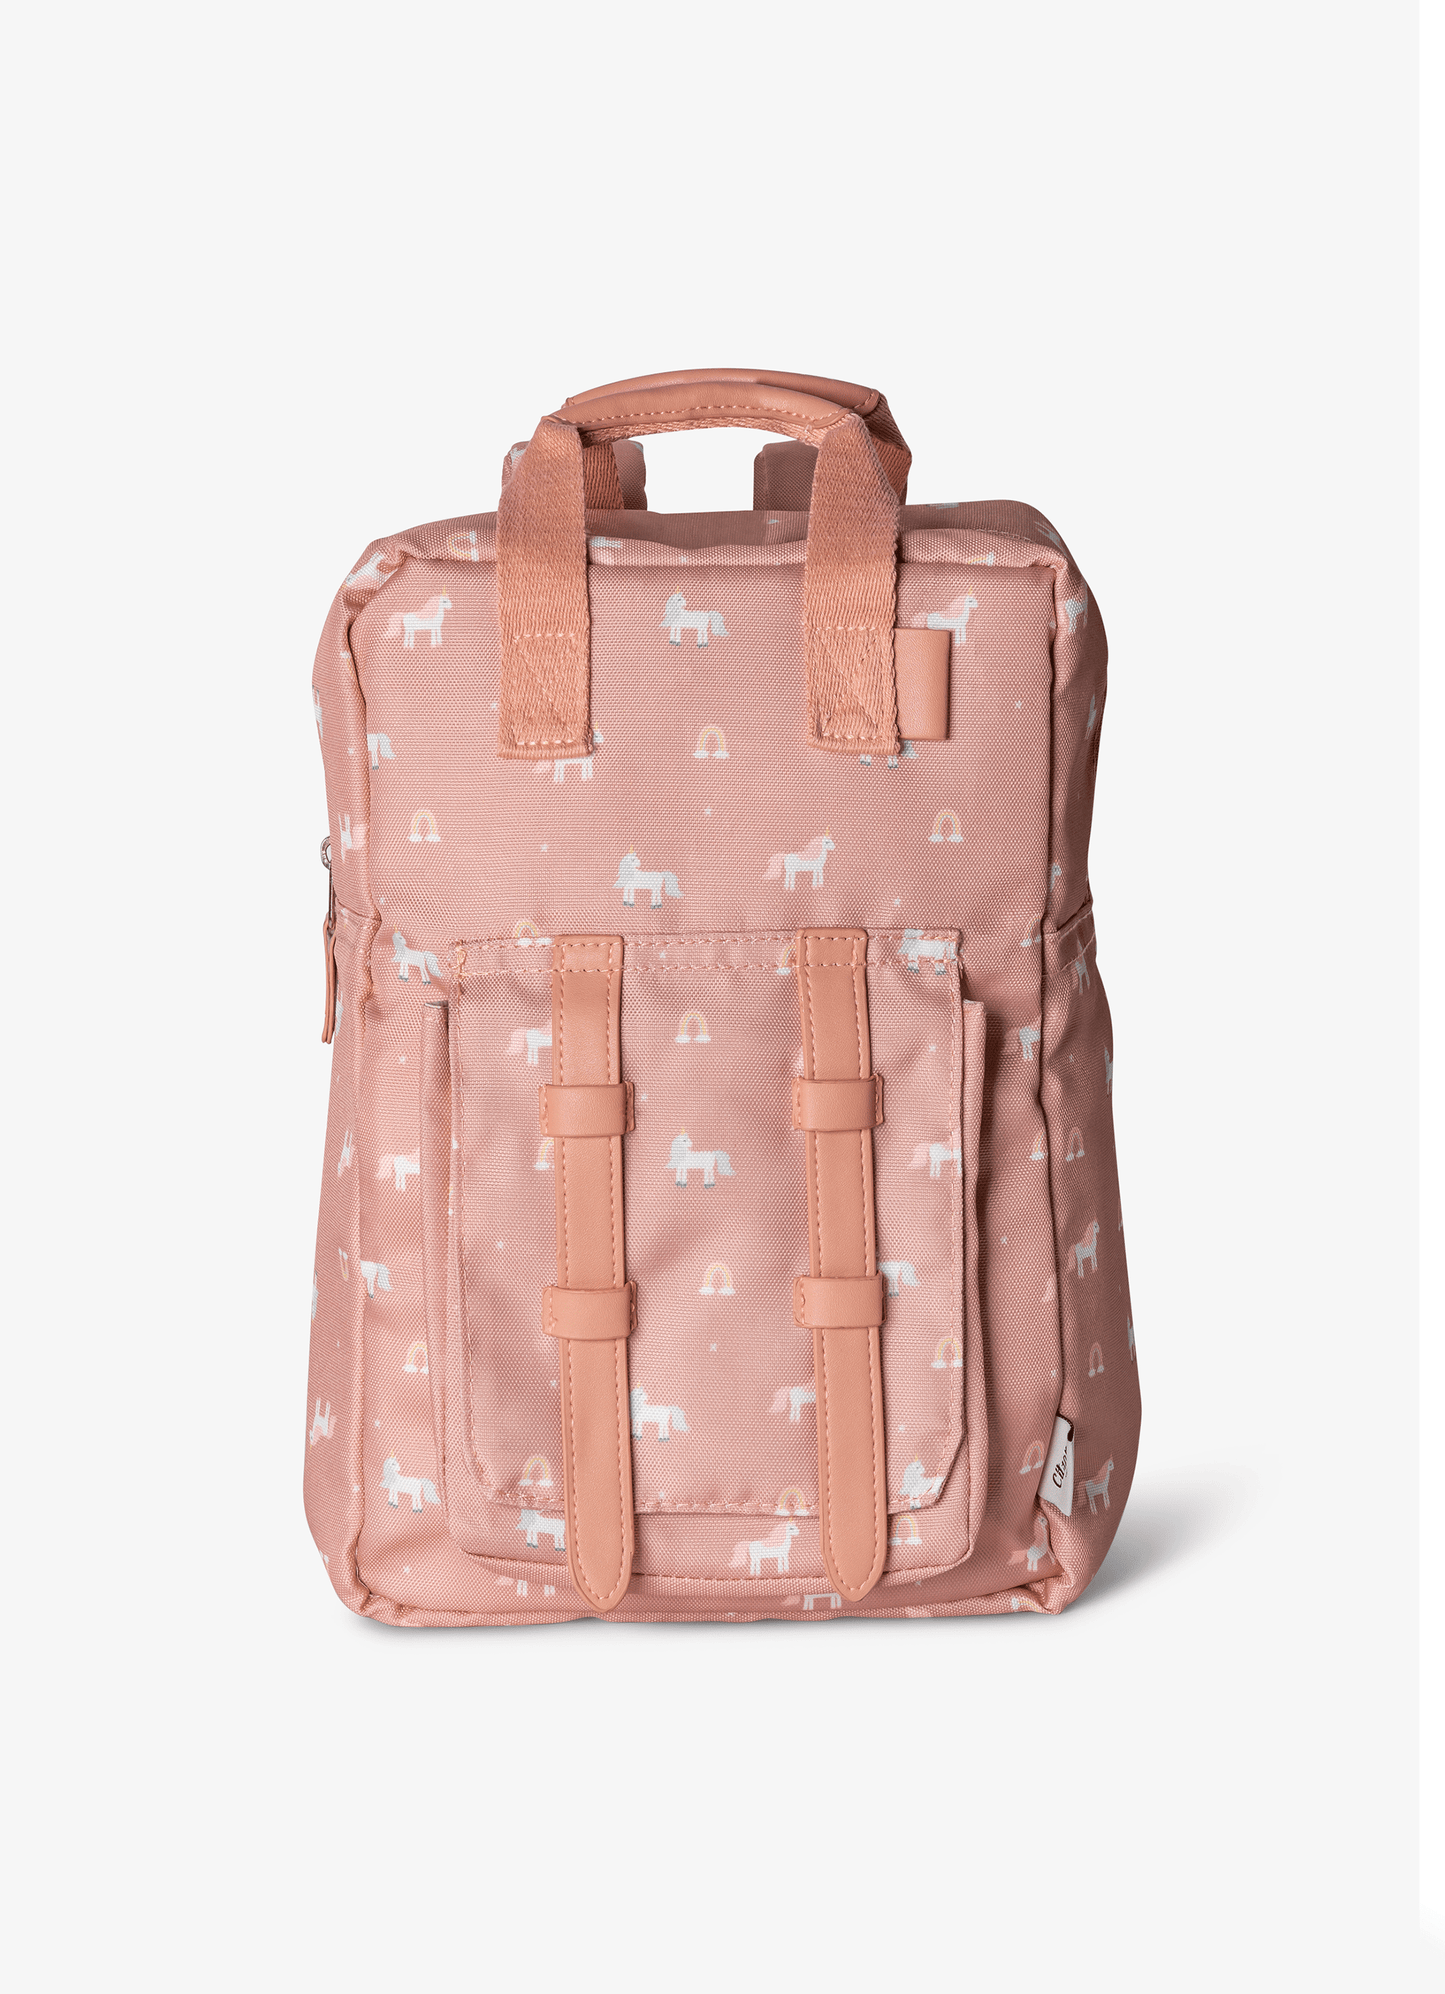 Citron - Kids backpack - Blush pink unicorn - Little Zebra